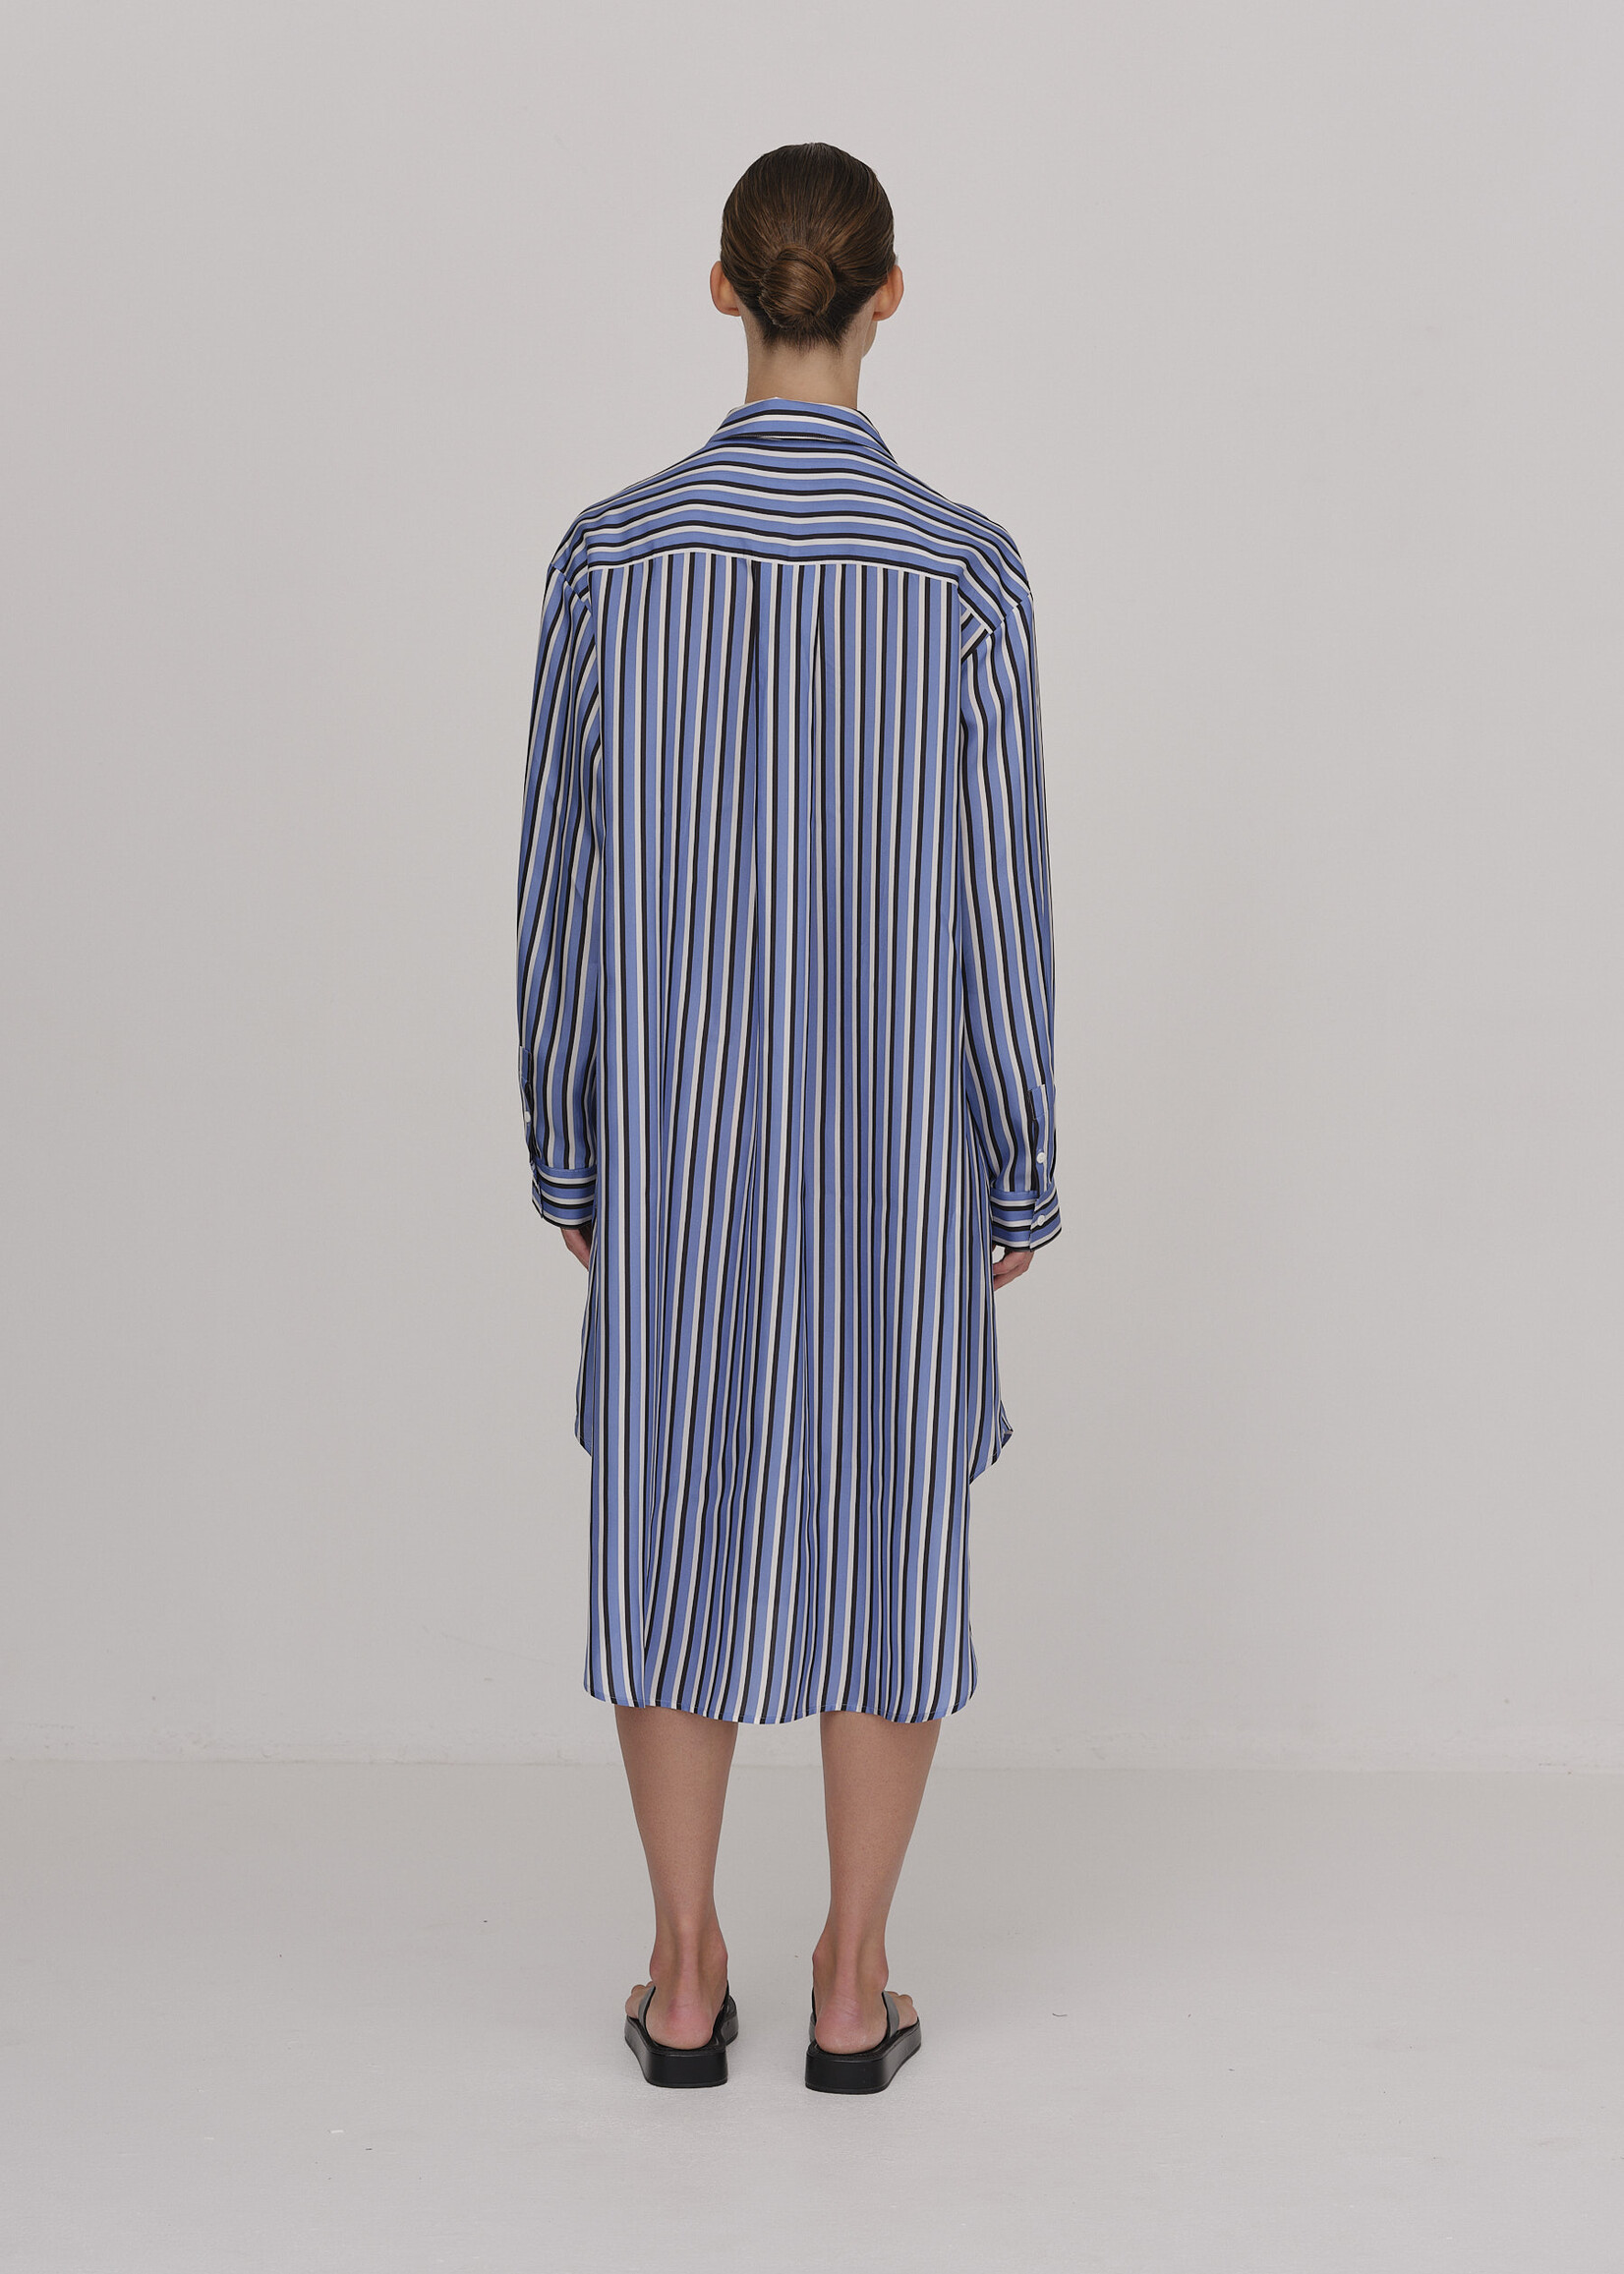 Birgitte Herskind Meyer Dress - Navy Blue Stripe